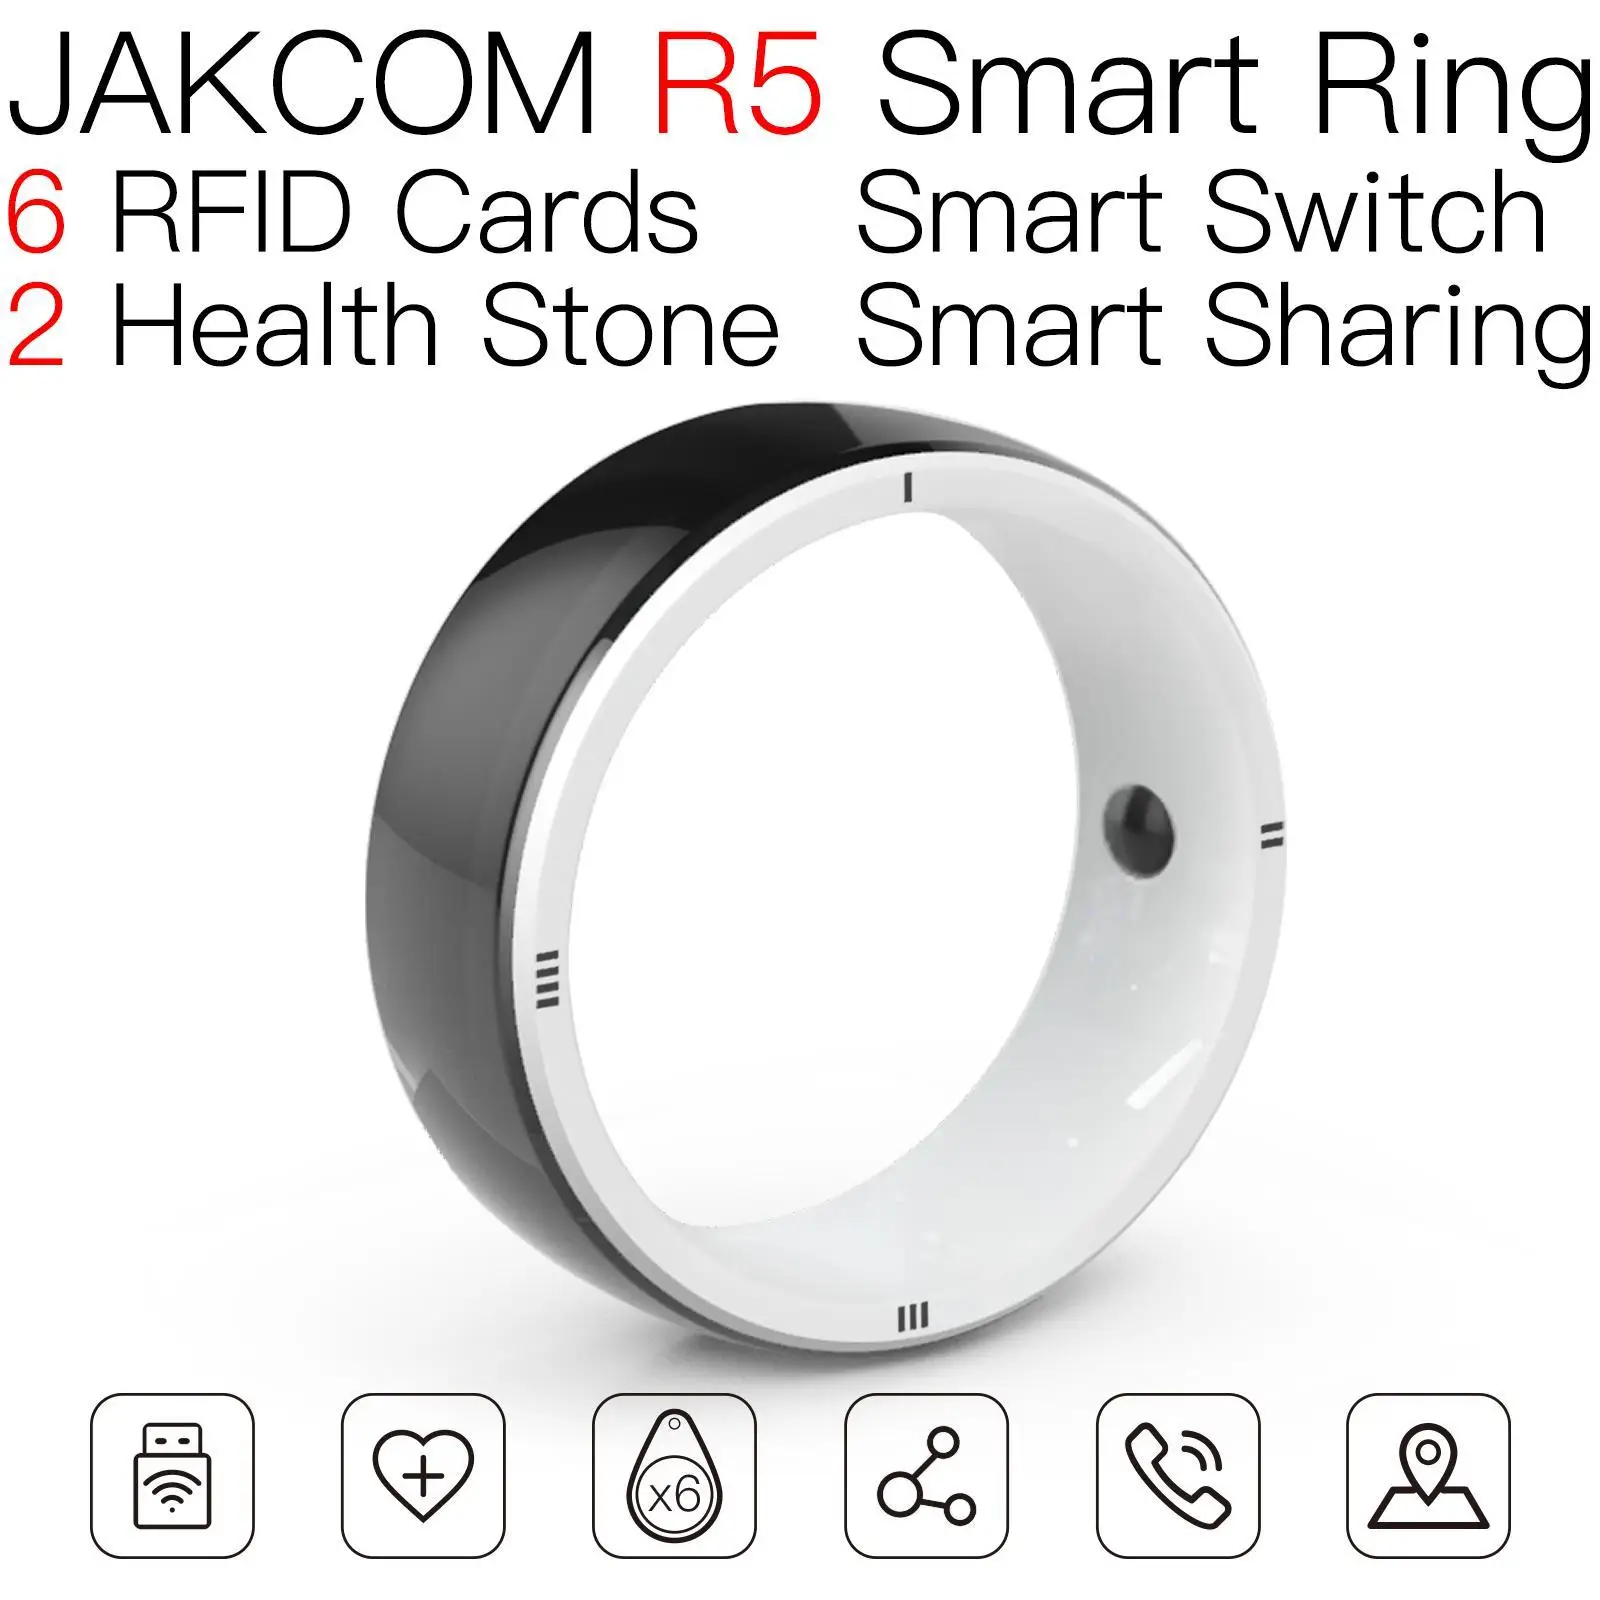 

JAKCOM R5 Smart Ring Super value than flashlight wristband tag hueur watch m26 plus mesh for women free bandas